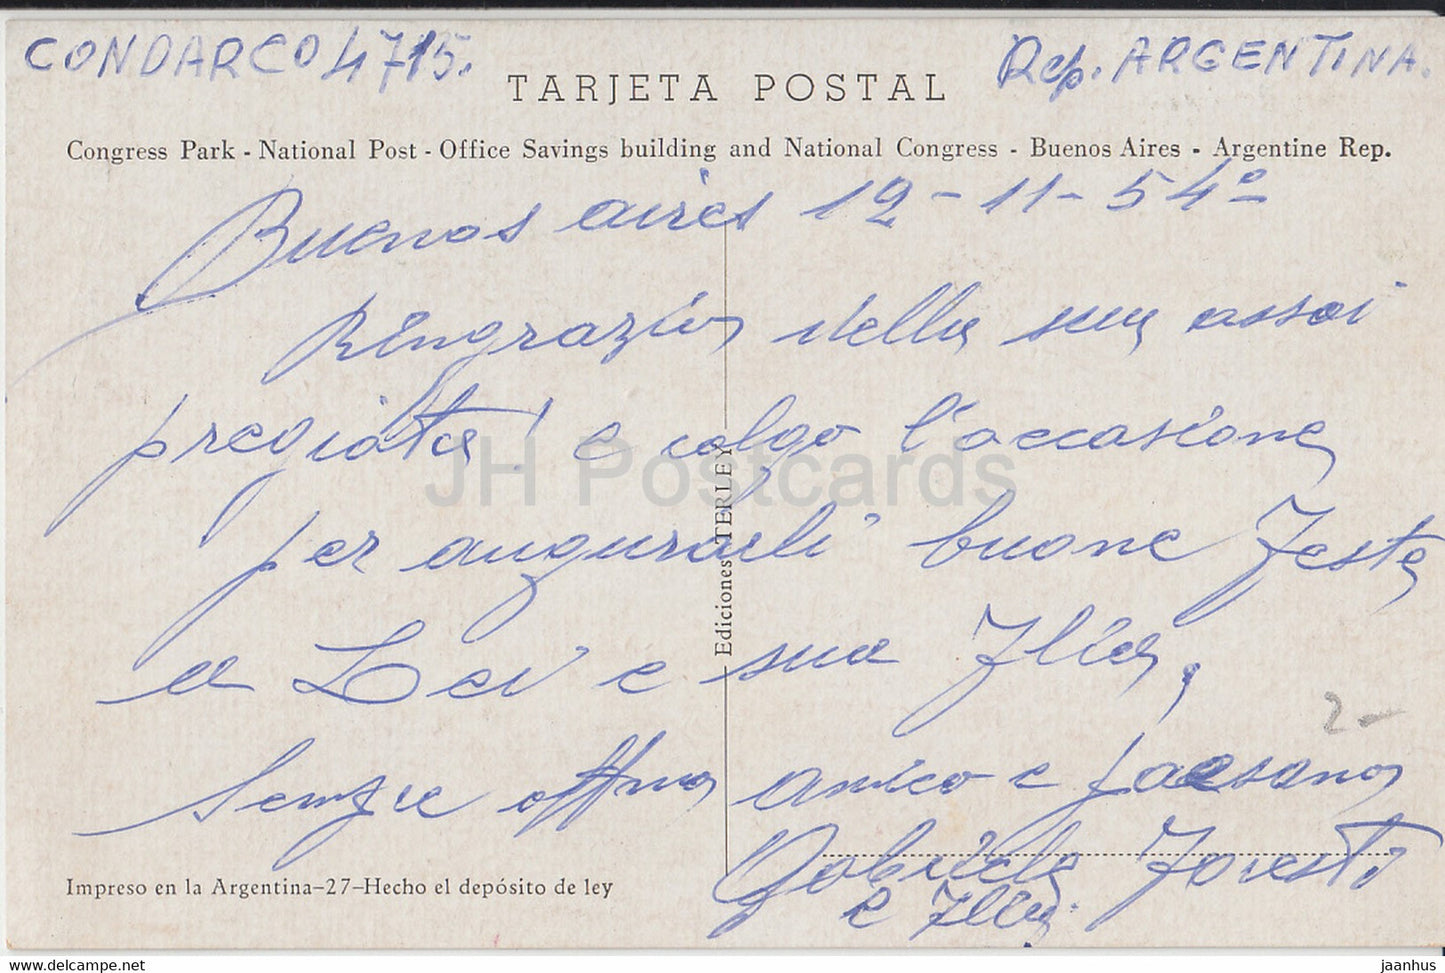 Buenos Aires - Plaza del Congreso - 241 - carte postale ancienne - 1954 - Argentine - utilisé